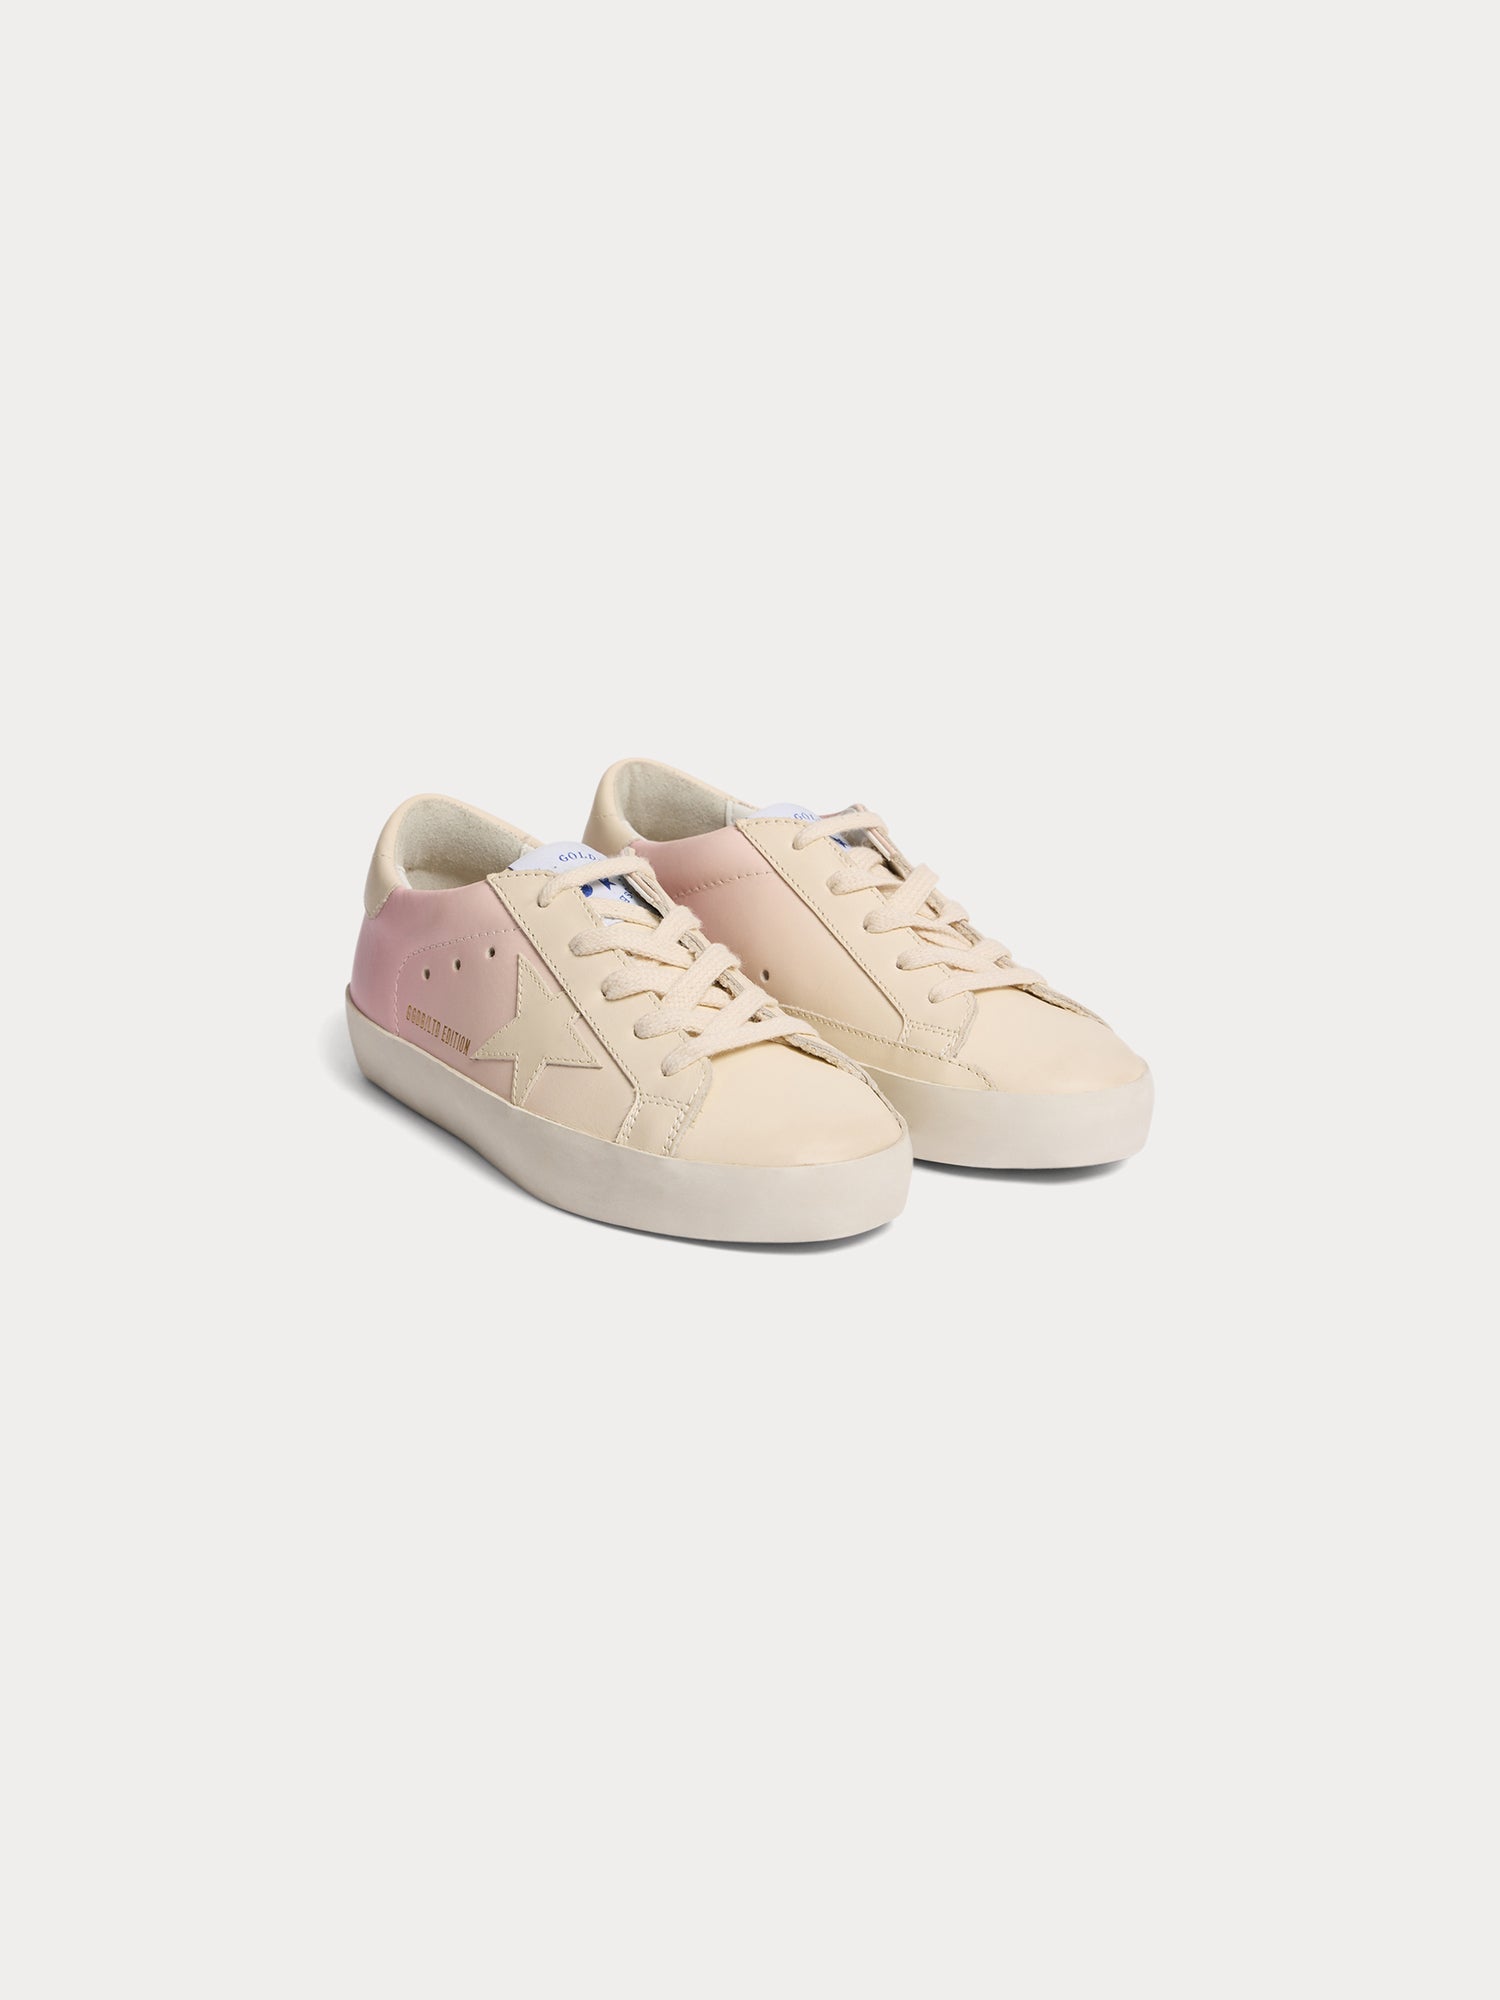 Girls Light Pink Baskets Shoes (Golden Goose x Bonpoint)